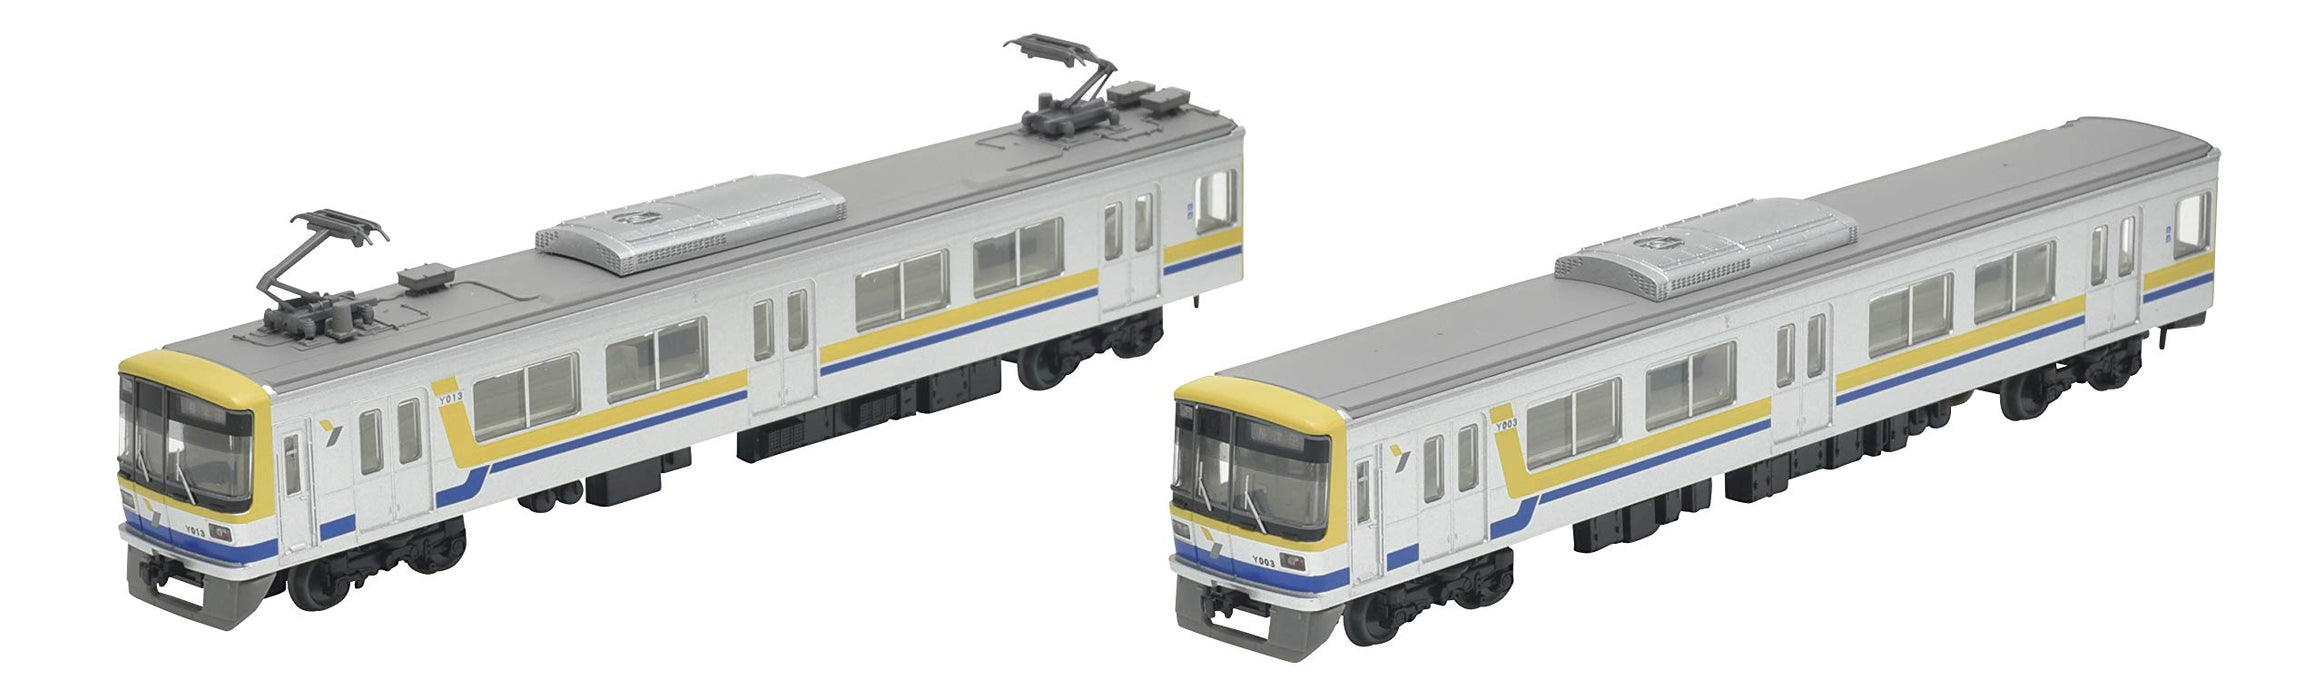 TOMYTEC Yokohama Minatomirai Railway Series Y000 Kodomonokuni Line 2 Cars Set N Scale